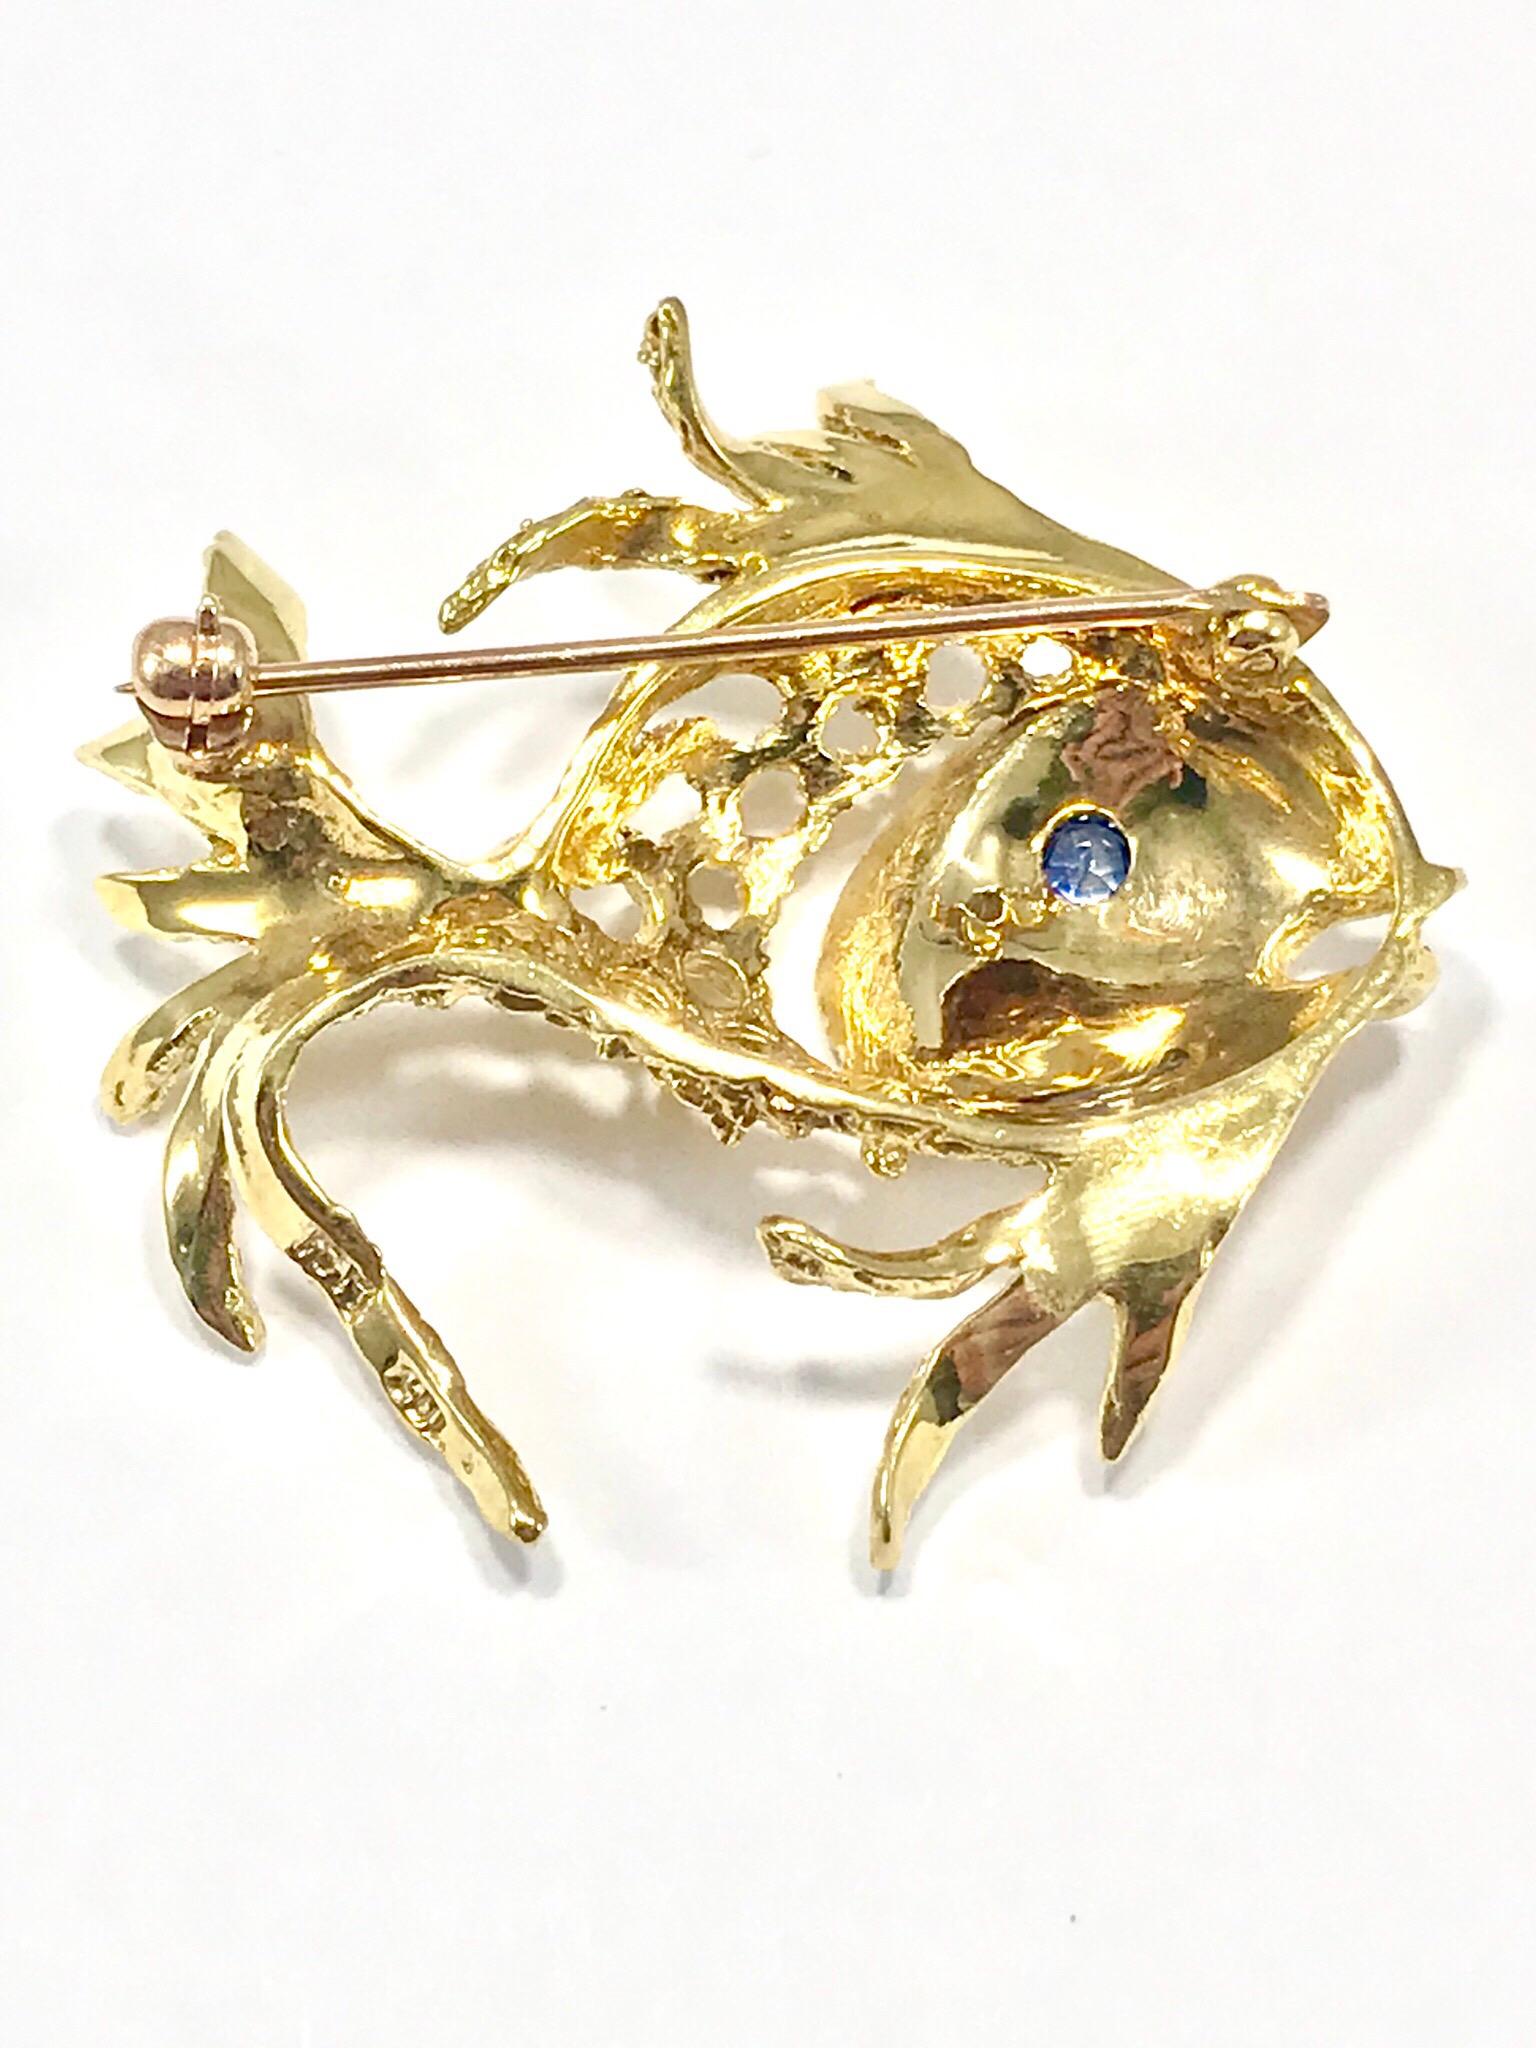 Women's or Men's 18 Karat Yellow Gold Angel Fish Brooch with Sapphire Eye